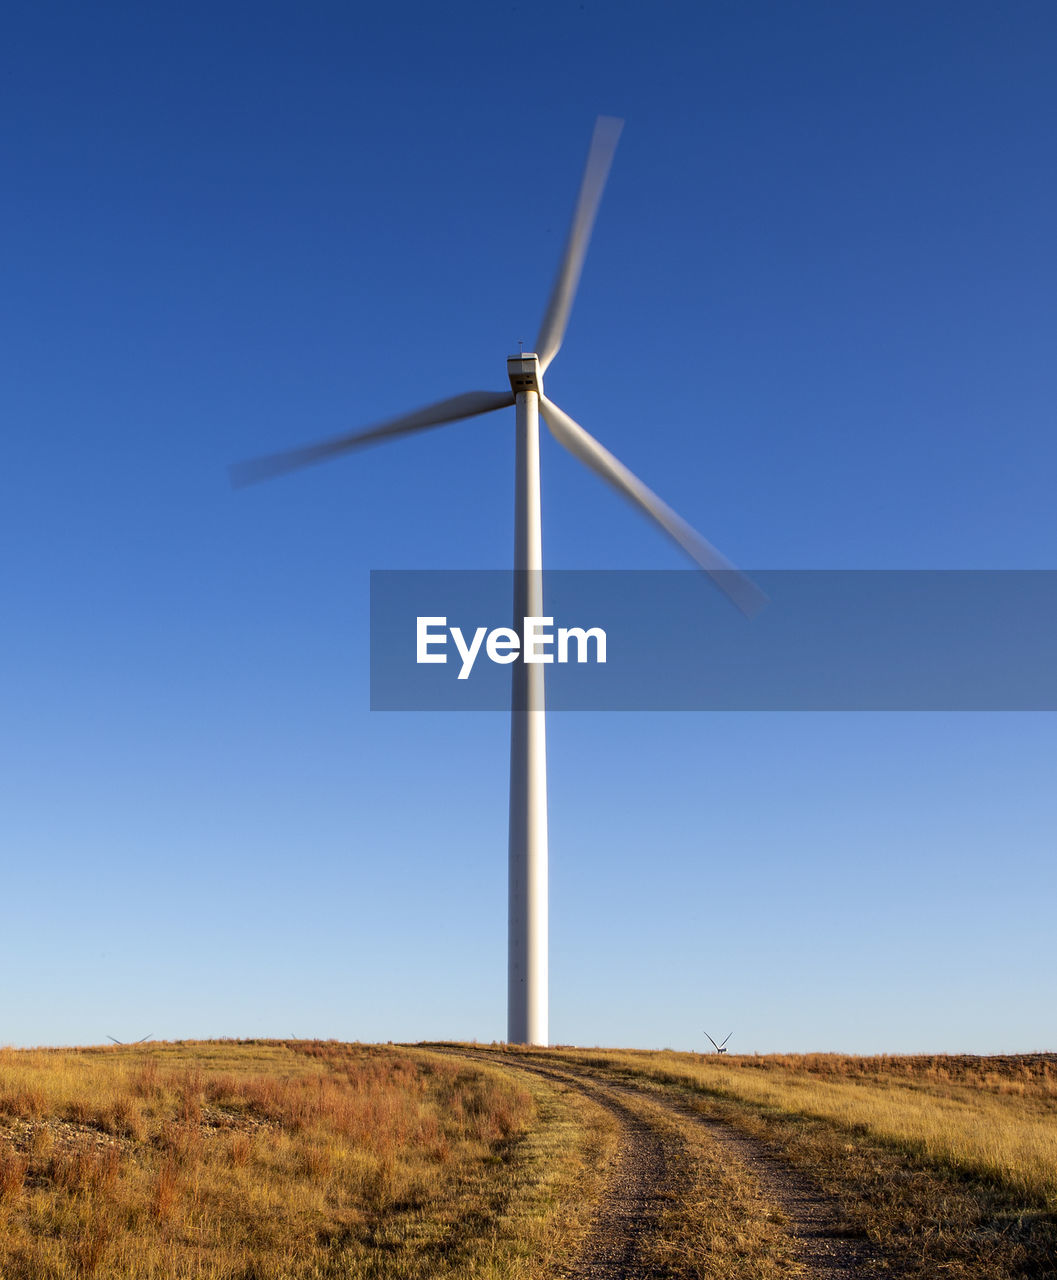 Wind turbine in motion against blue sky